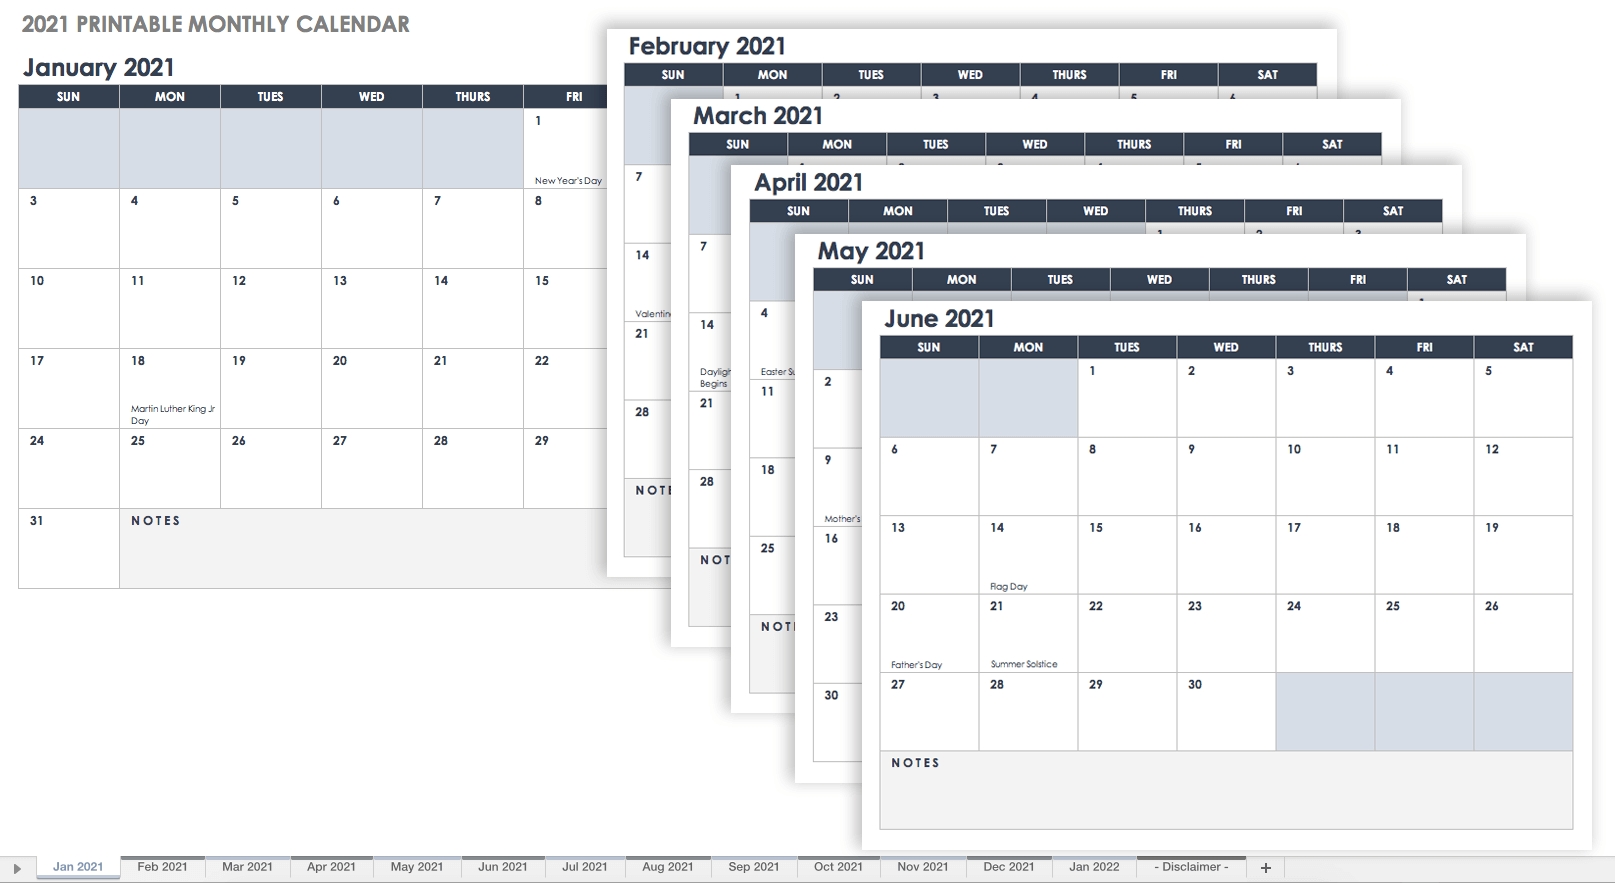 google-printable-monthly-calendar-2021-printable-blank-calendar-template